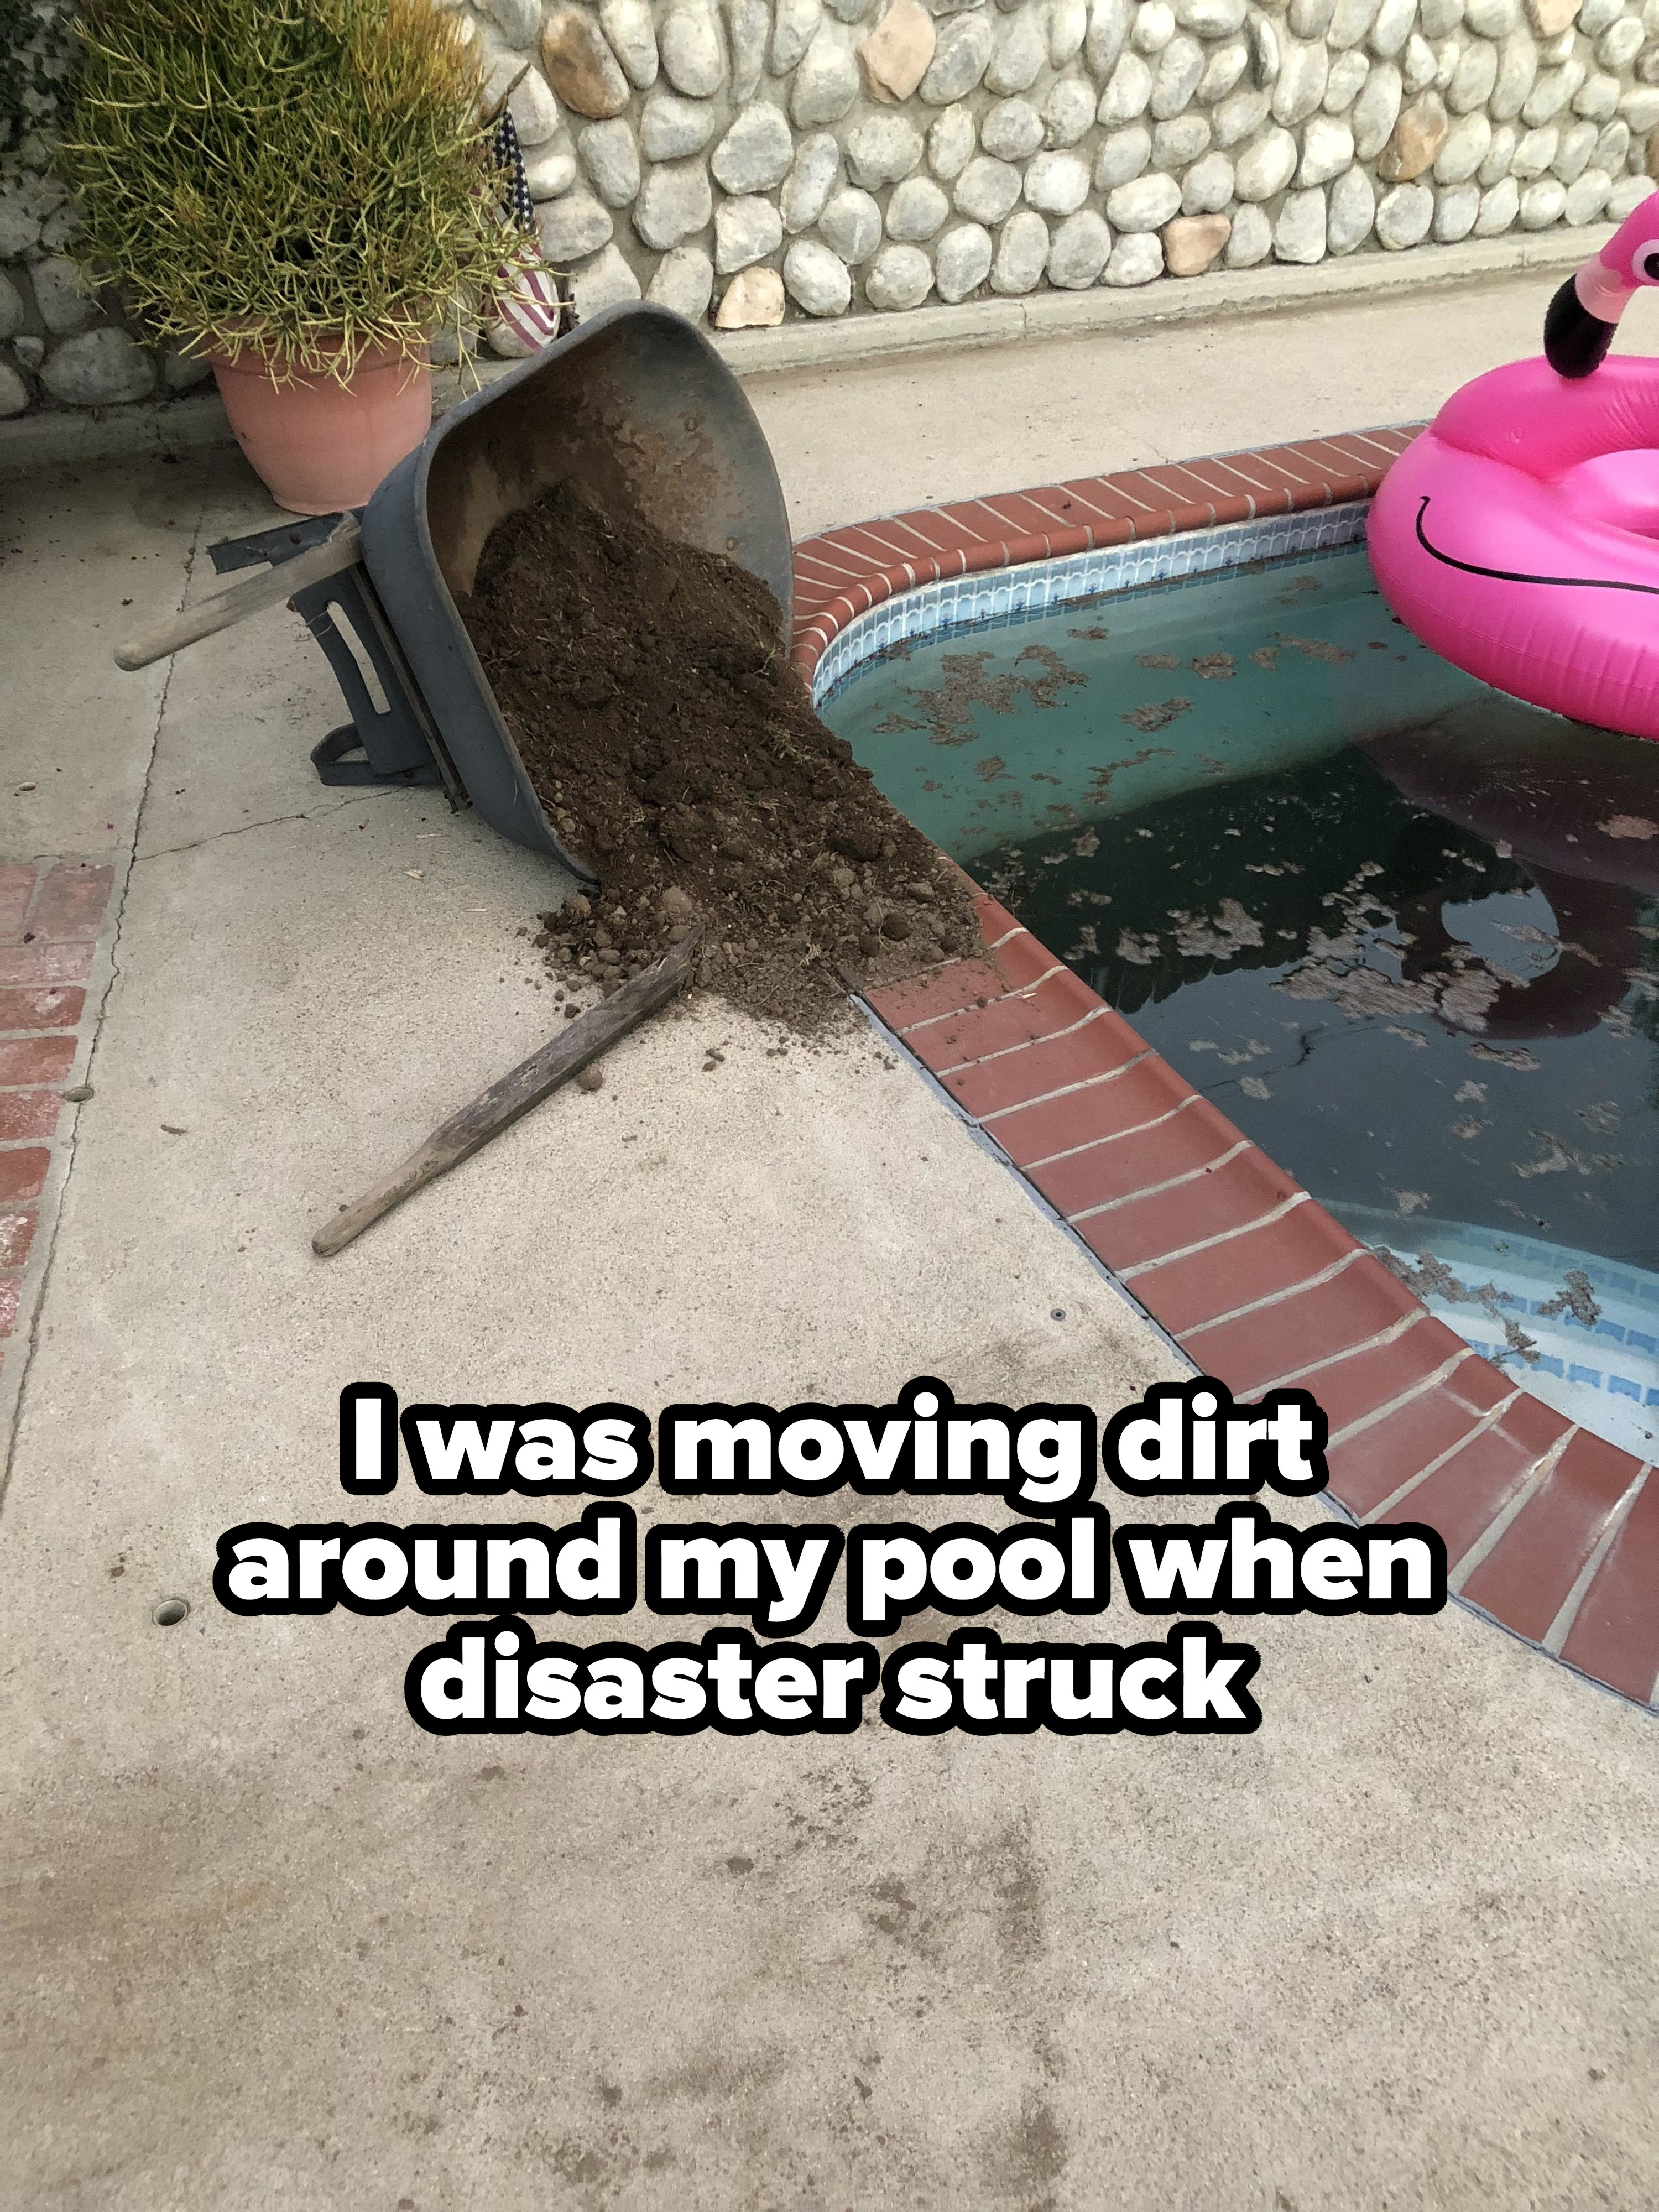 A dirty pool